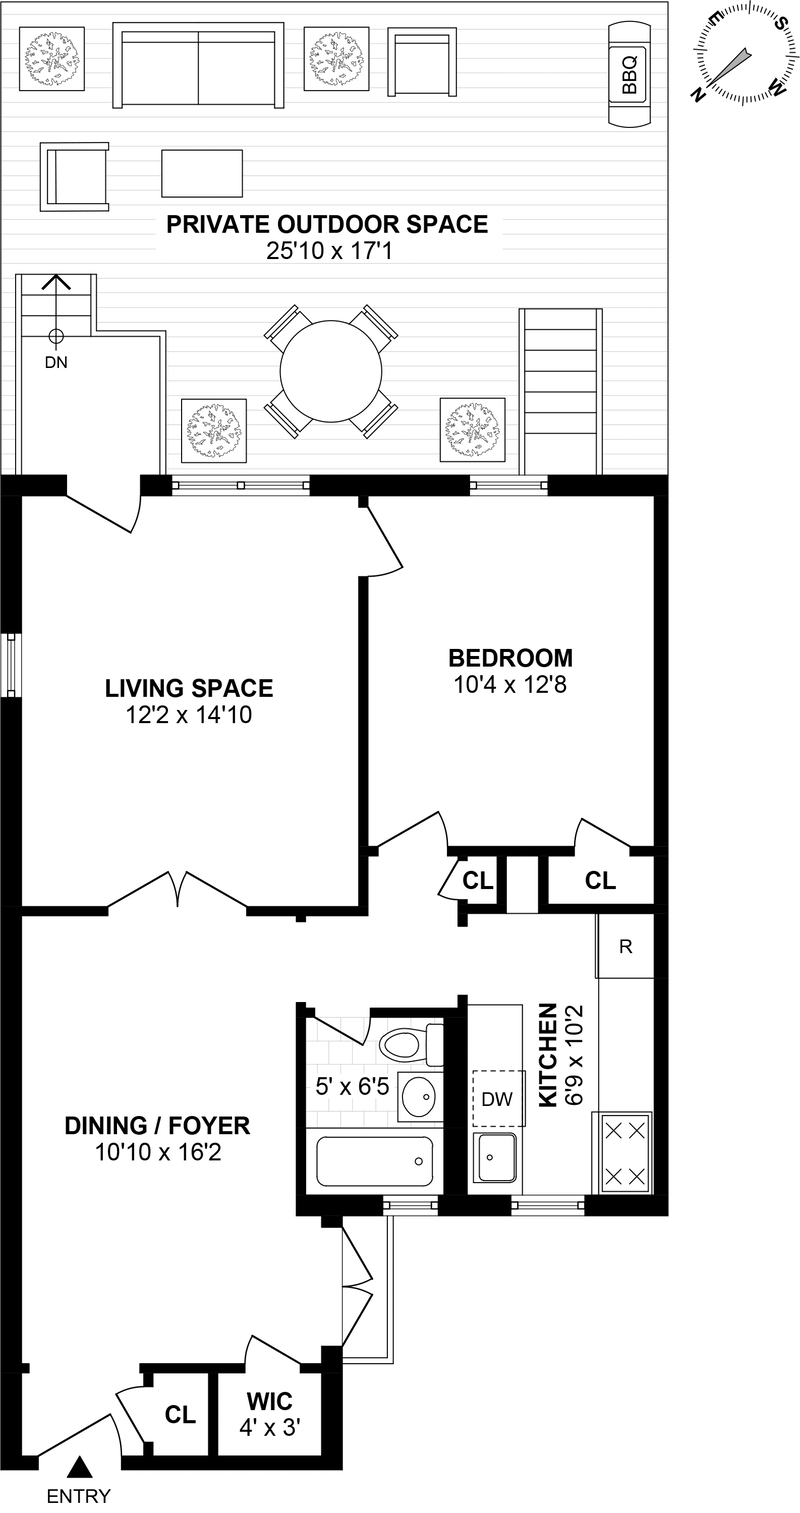 Floorplan for 167 Hicks Street, 2